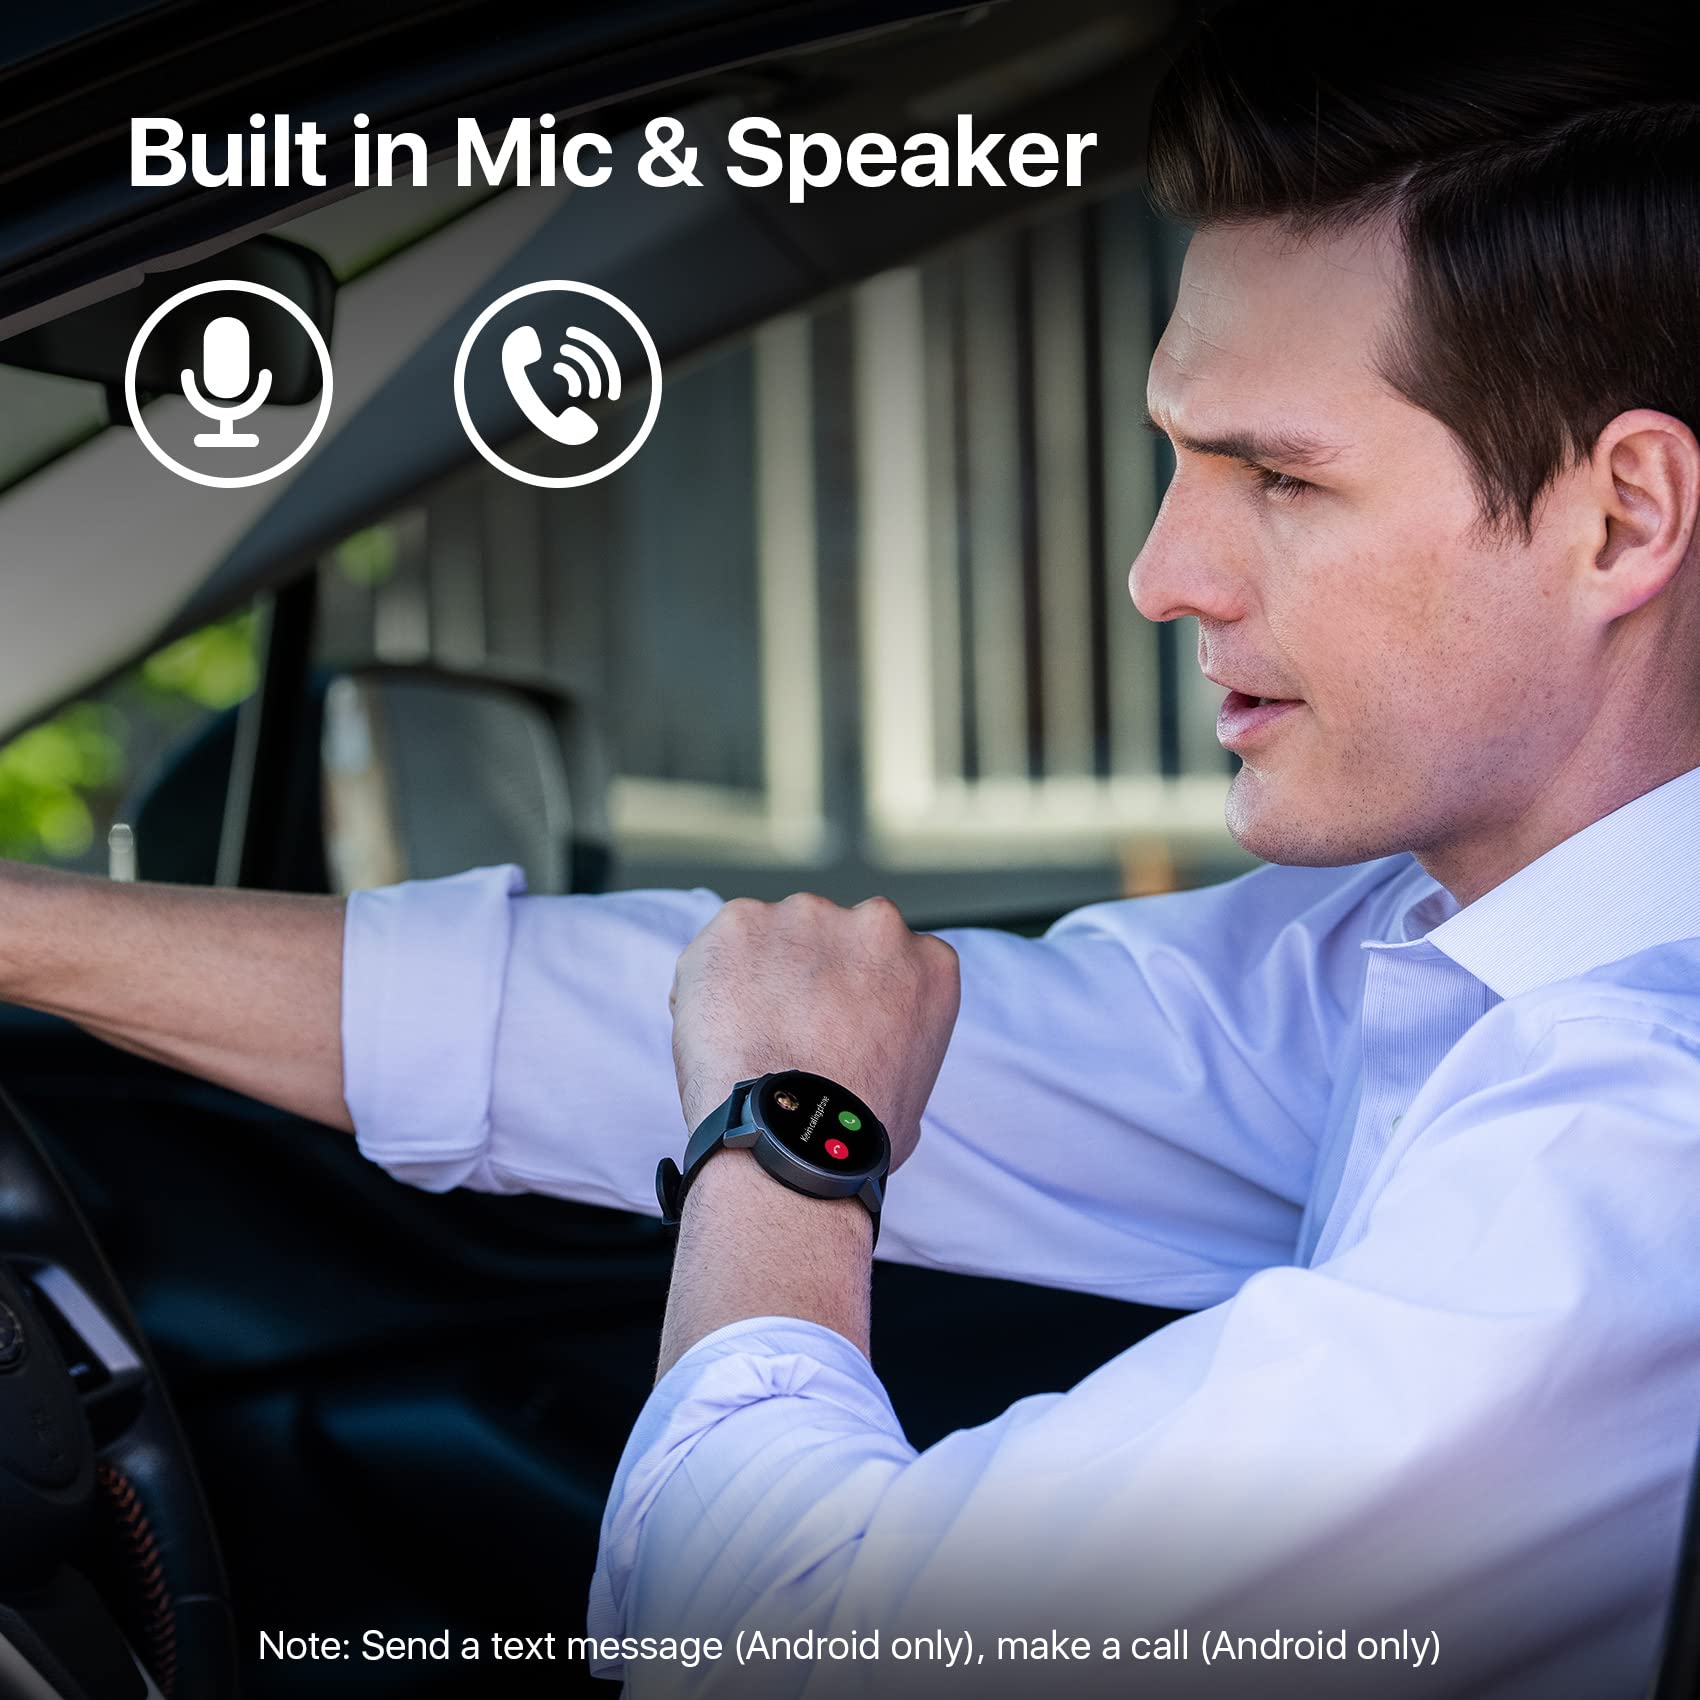 Ticwatch E3 Smart Watch Wear OS by Google for Men Women Plus 20mm Width Brown Leather Replacement Watchband, Qualcomm SDW4100 Platform Health Monitor Fitness Tracker GPS NFC Mic Speaker IP68 Waterproo